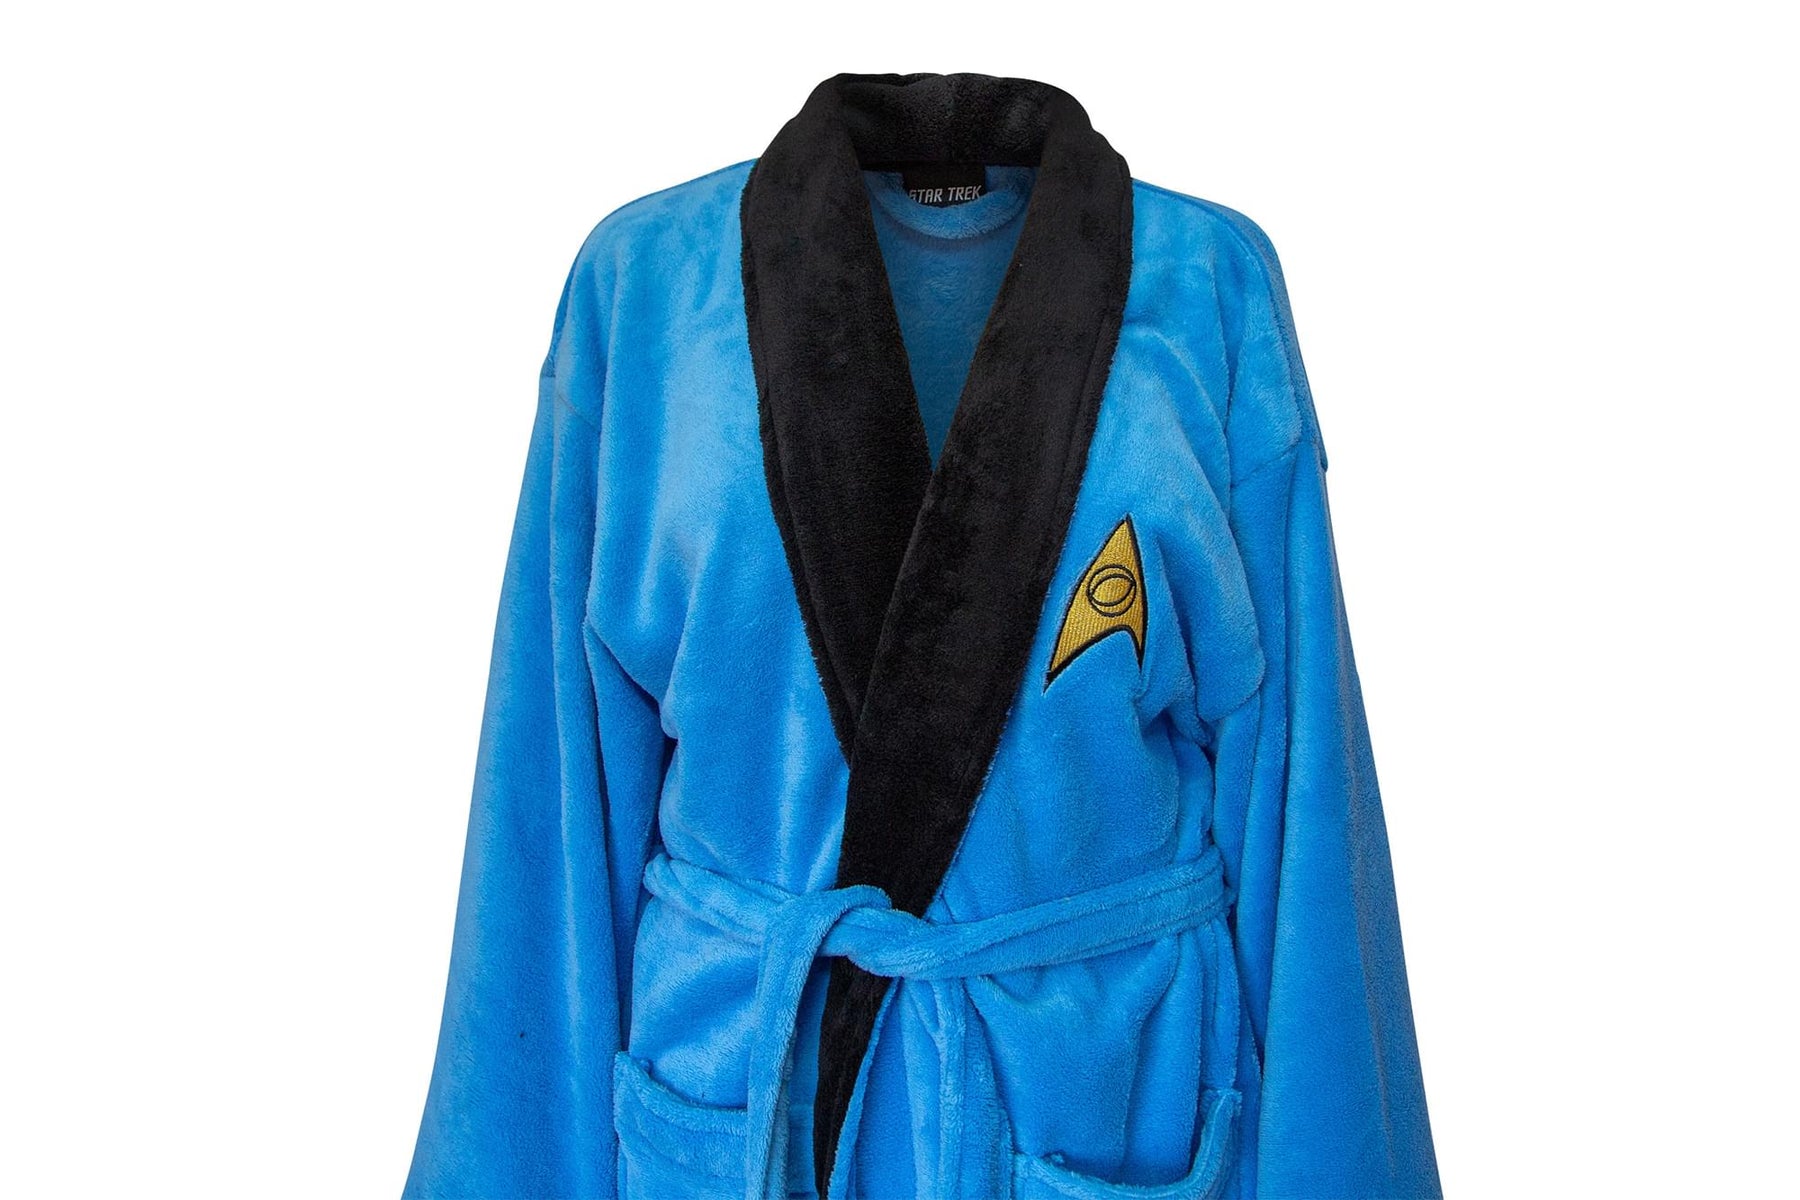 Star Trek Spock Fleece Bathrobe for Adults | One Size Fits Most